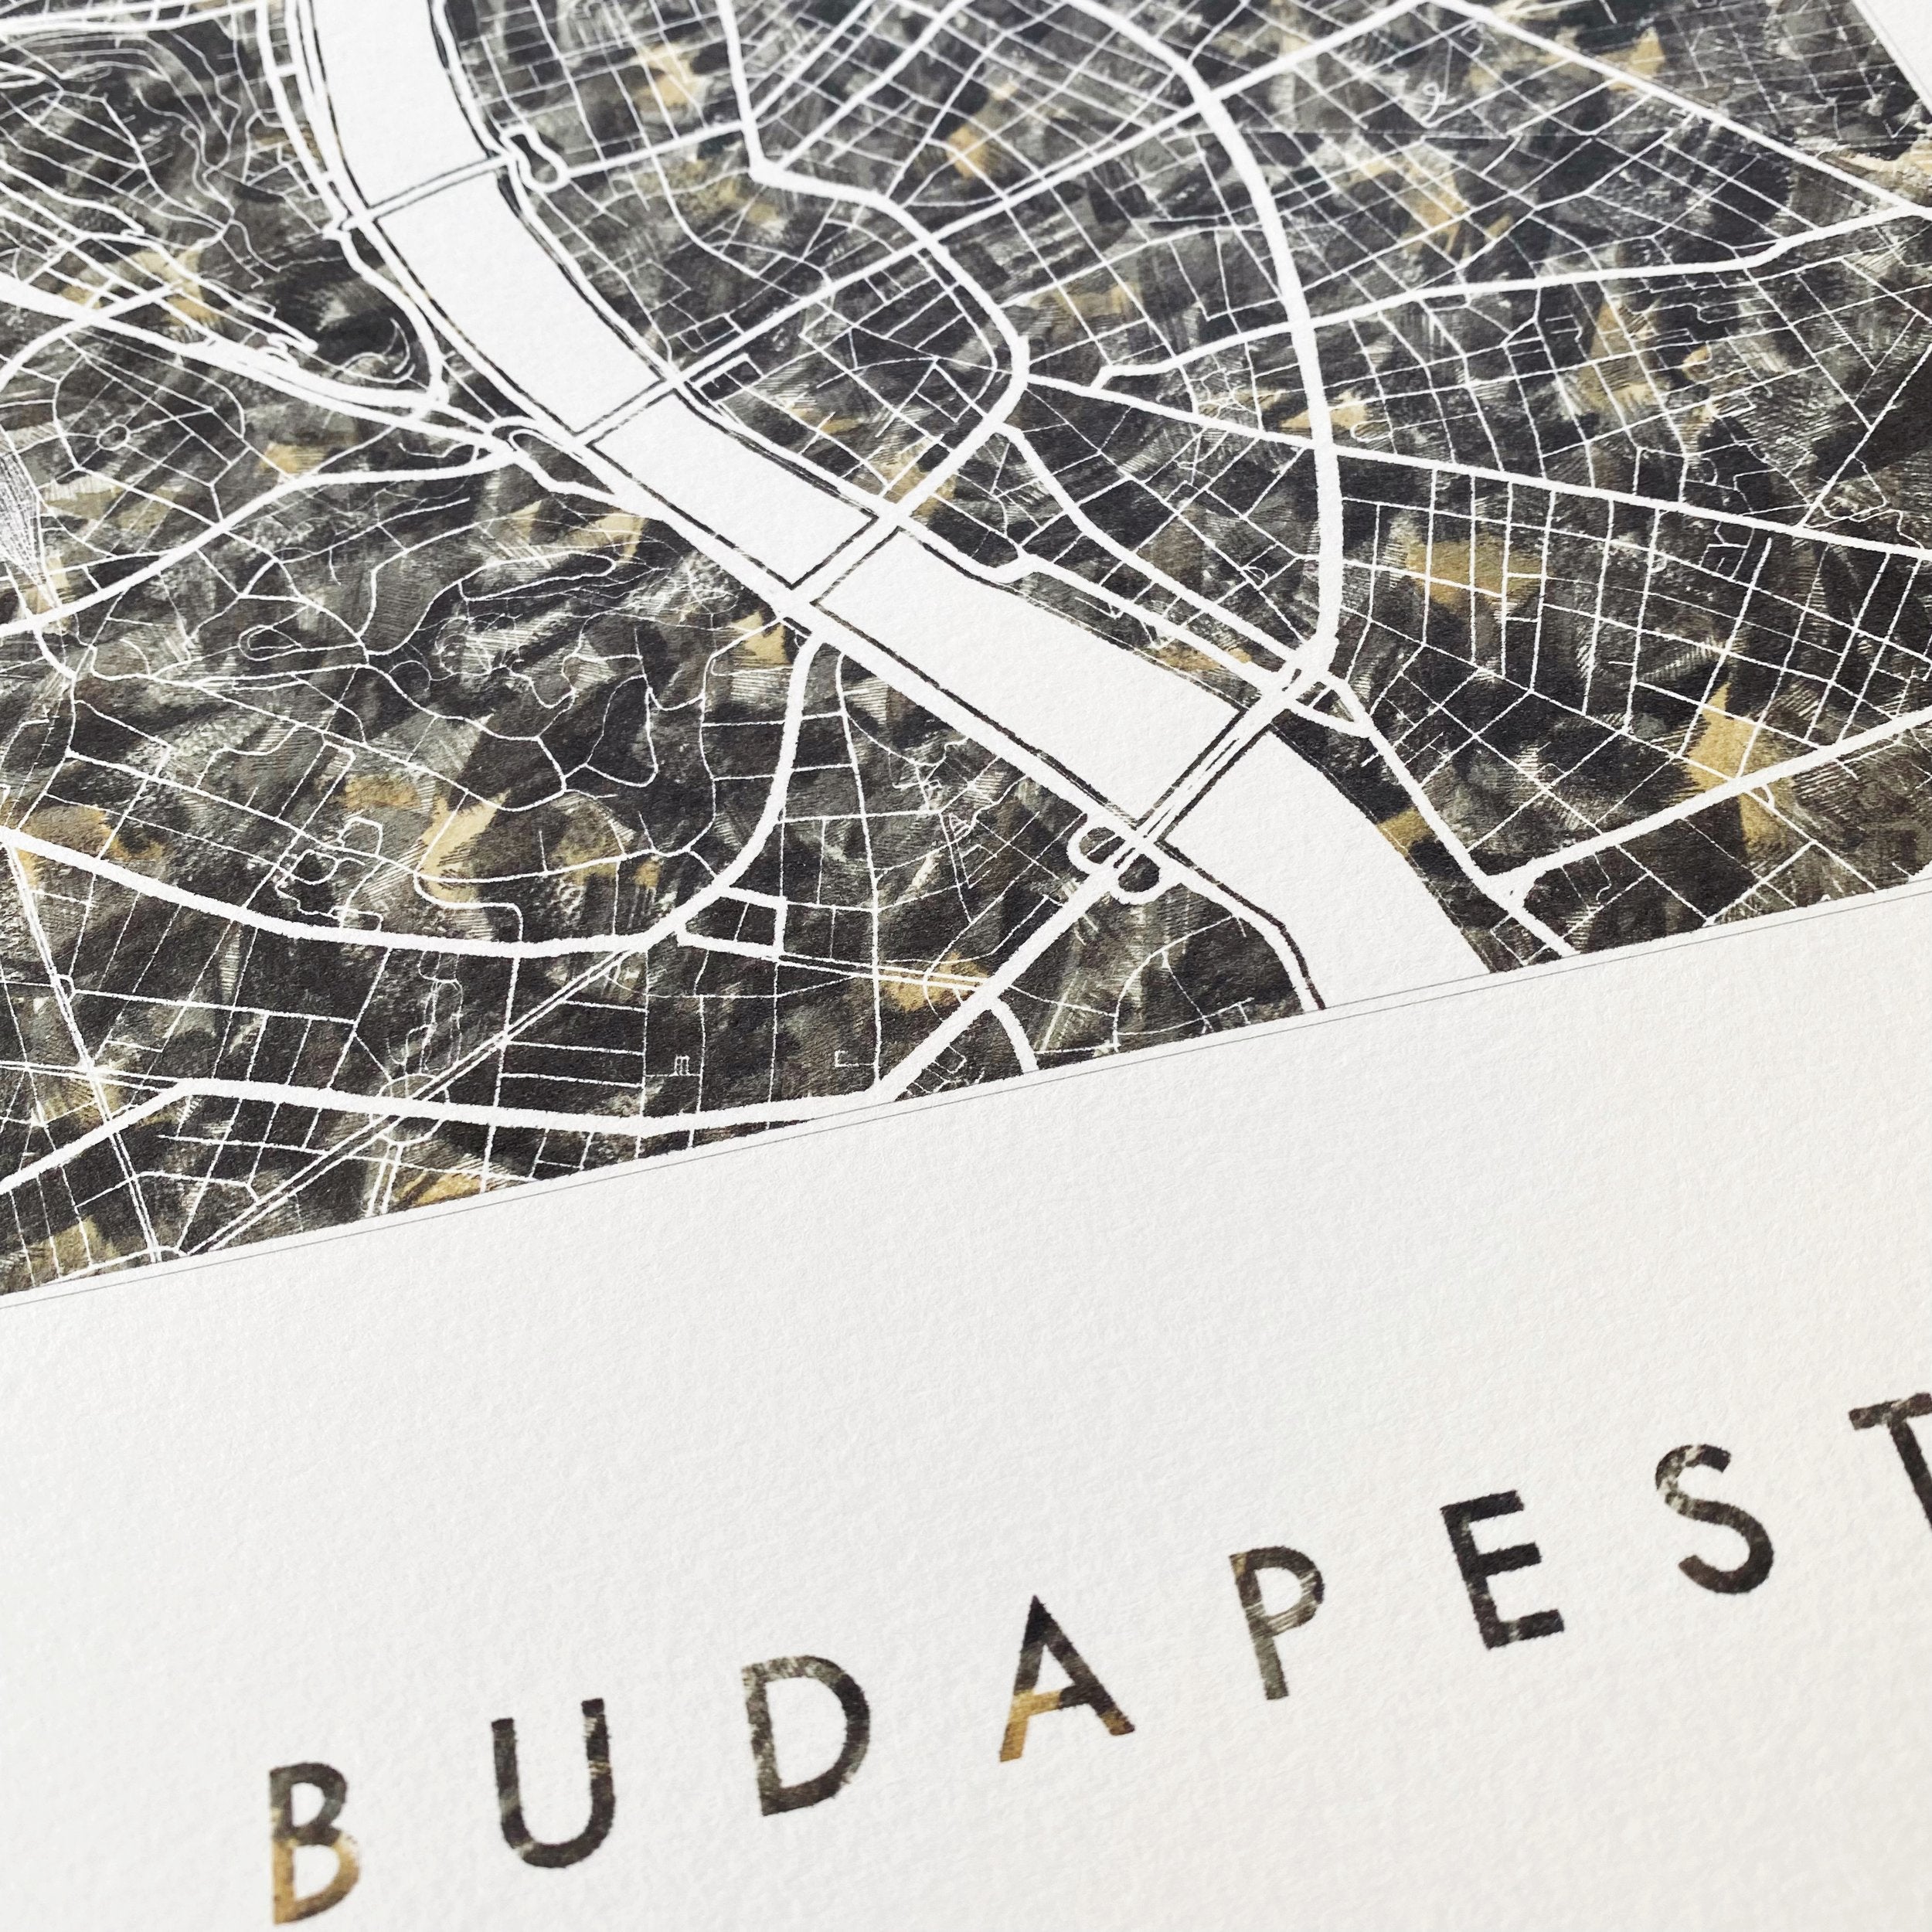 BUDAPEST Urban Fabrics City Map: PRINT